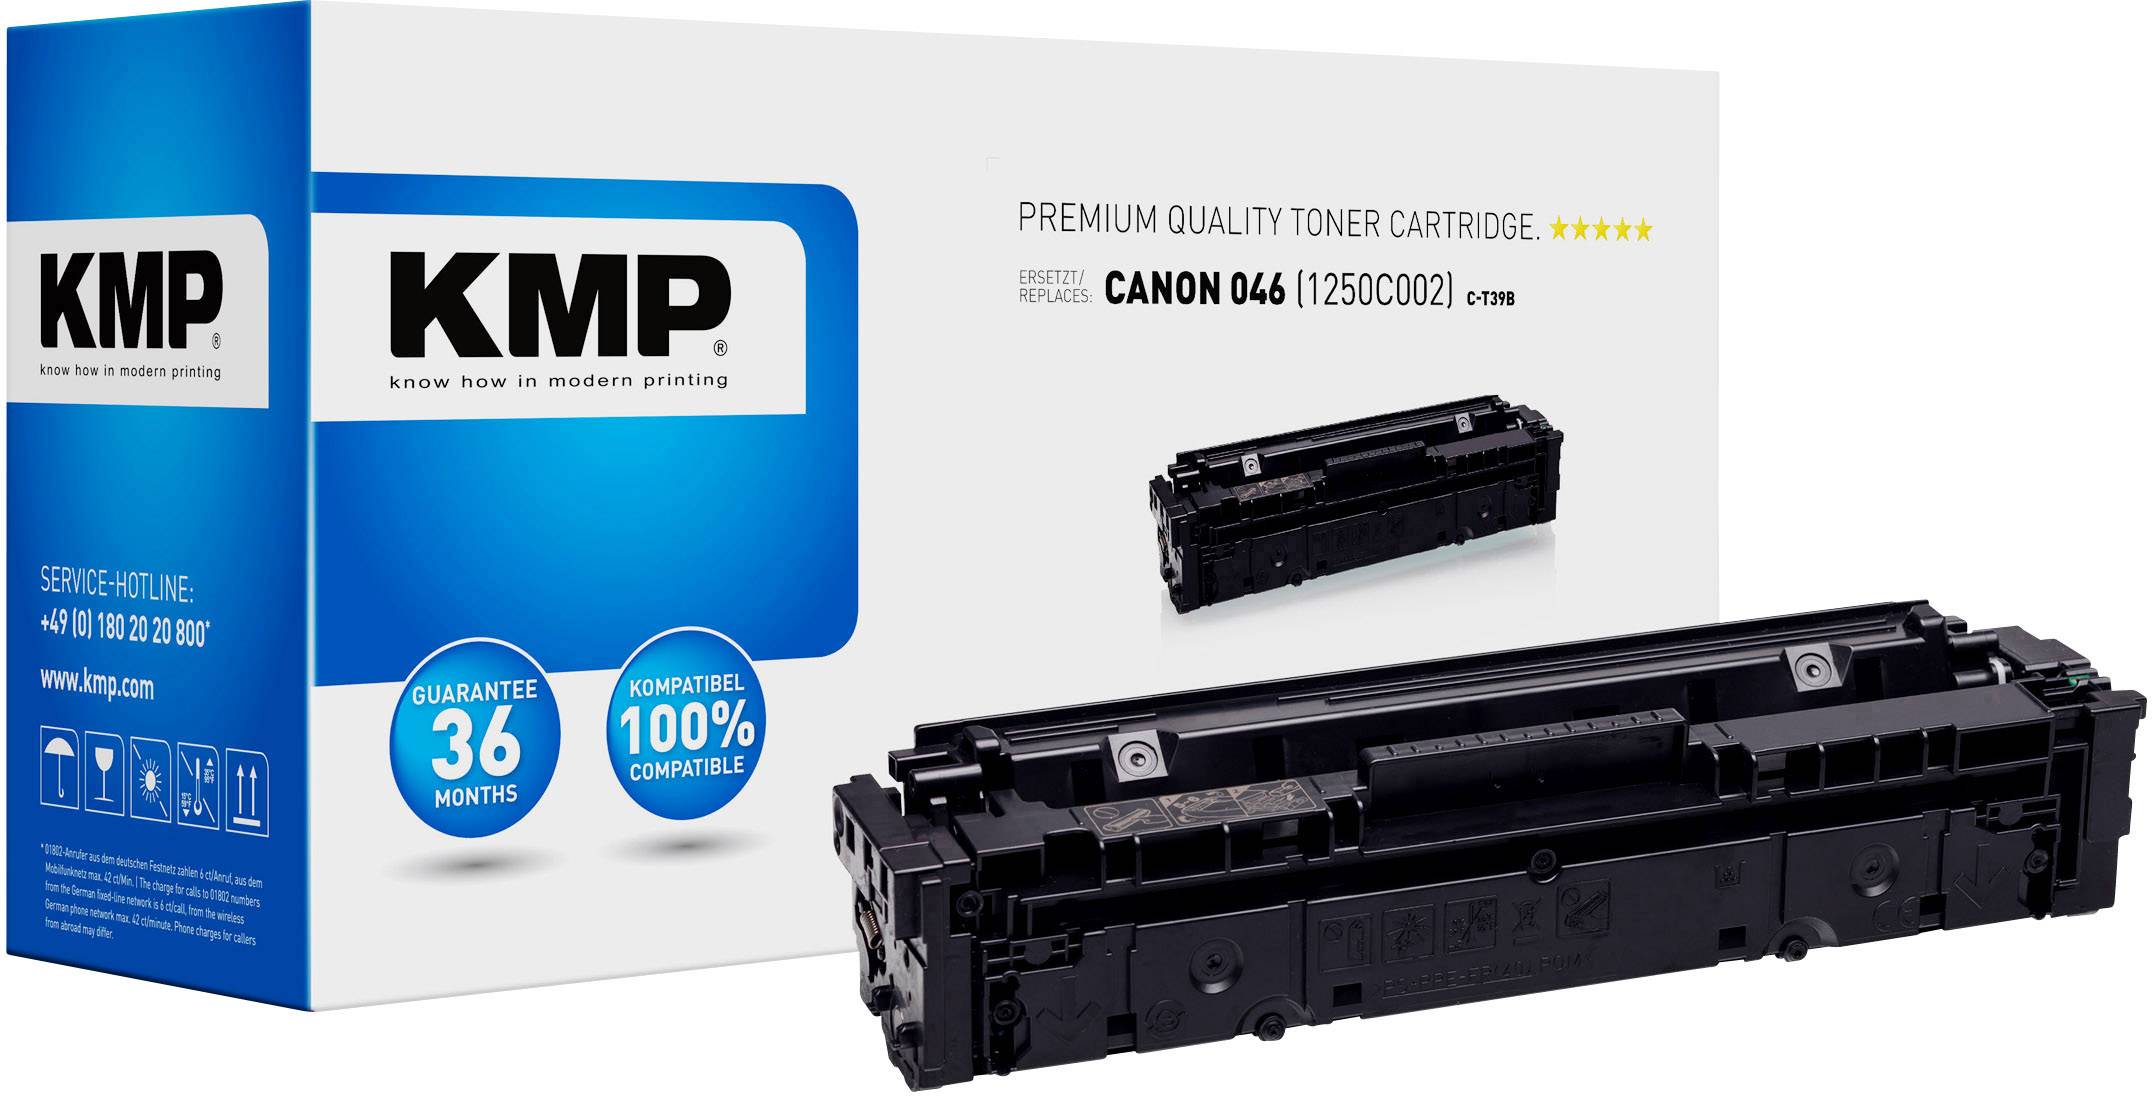 KMP Toner cartridge replaced 046 Black 2200 Sides C-T39B | Conrad.com